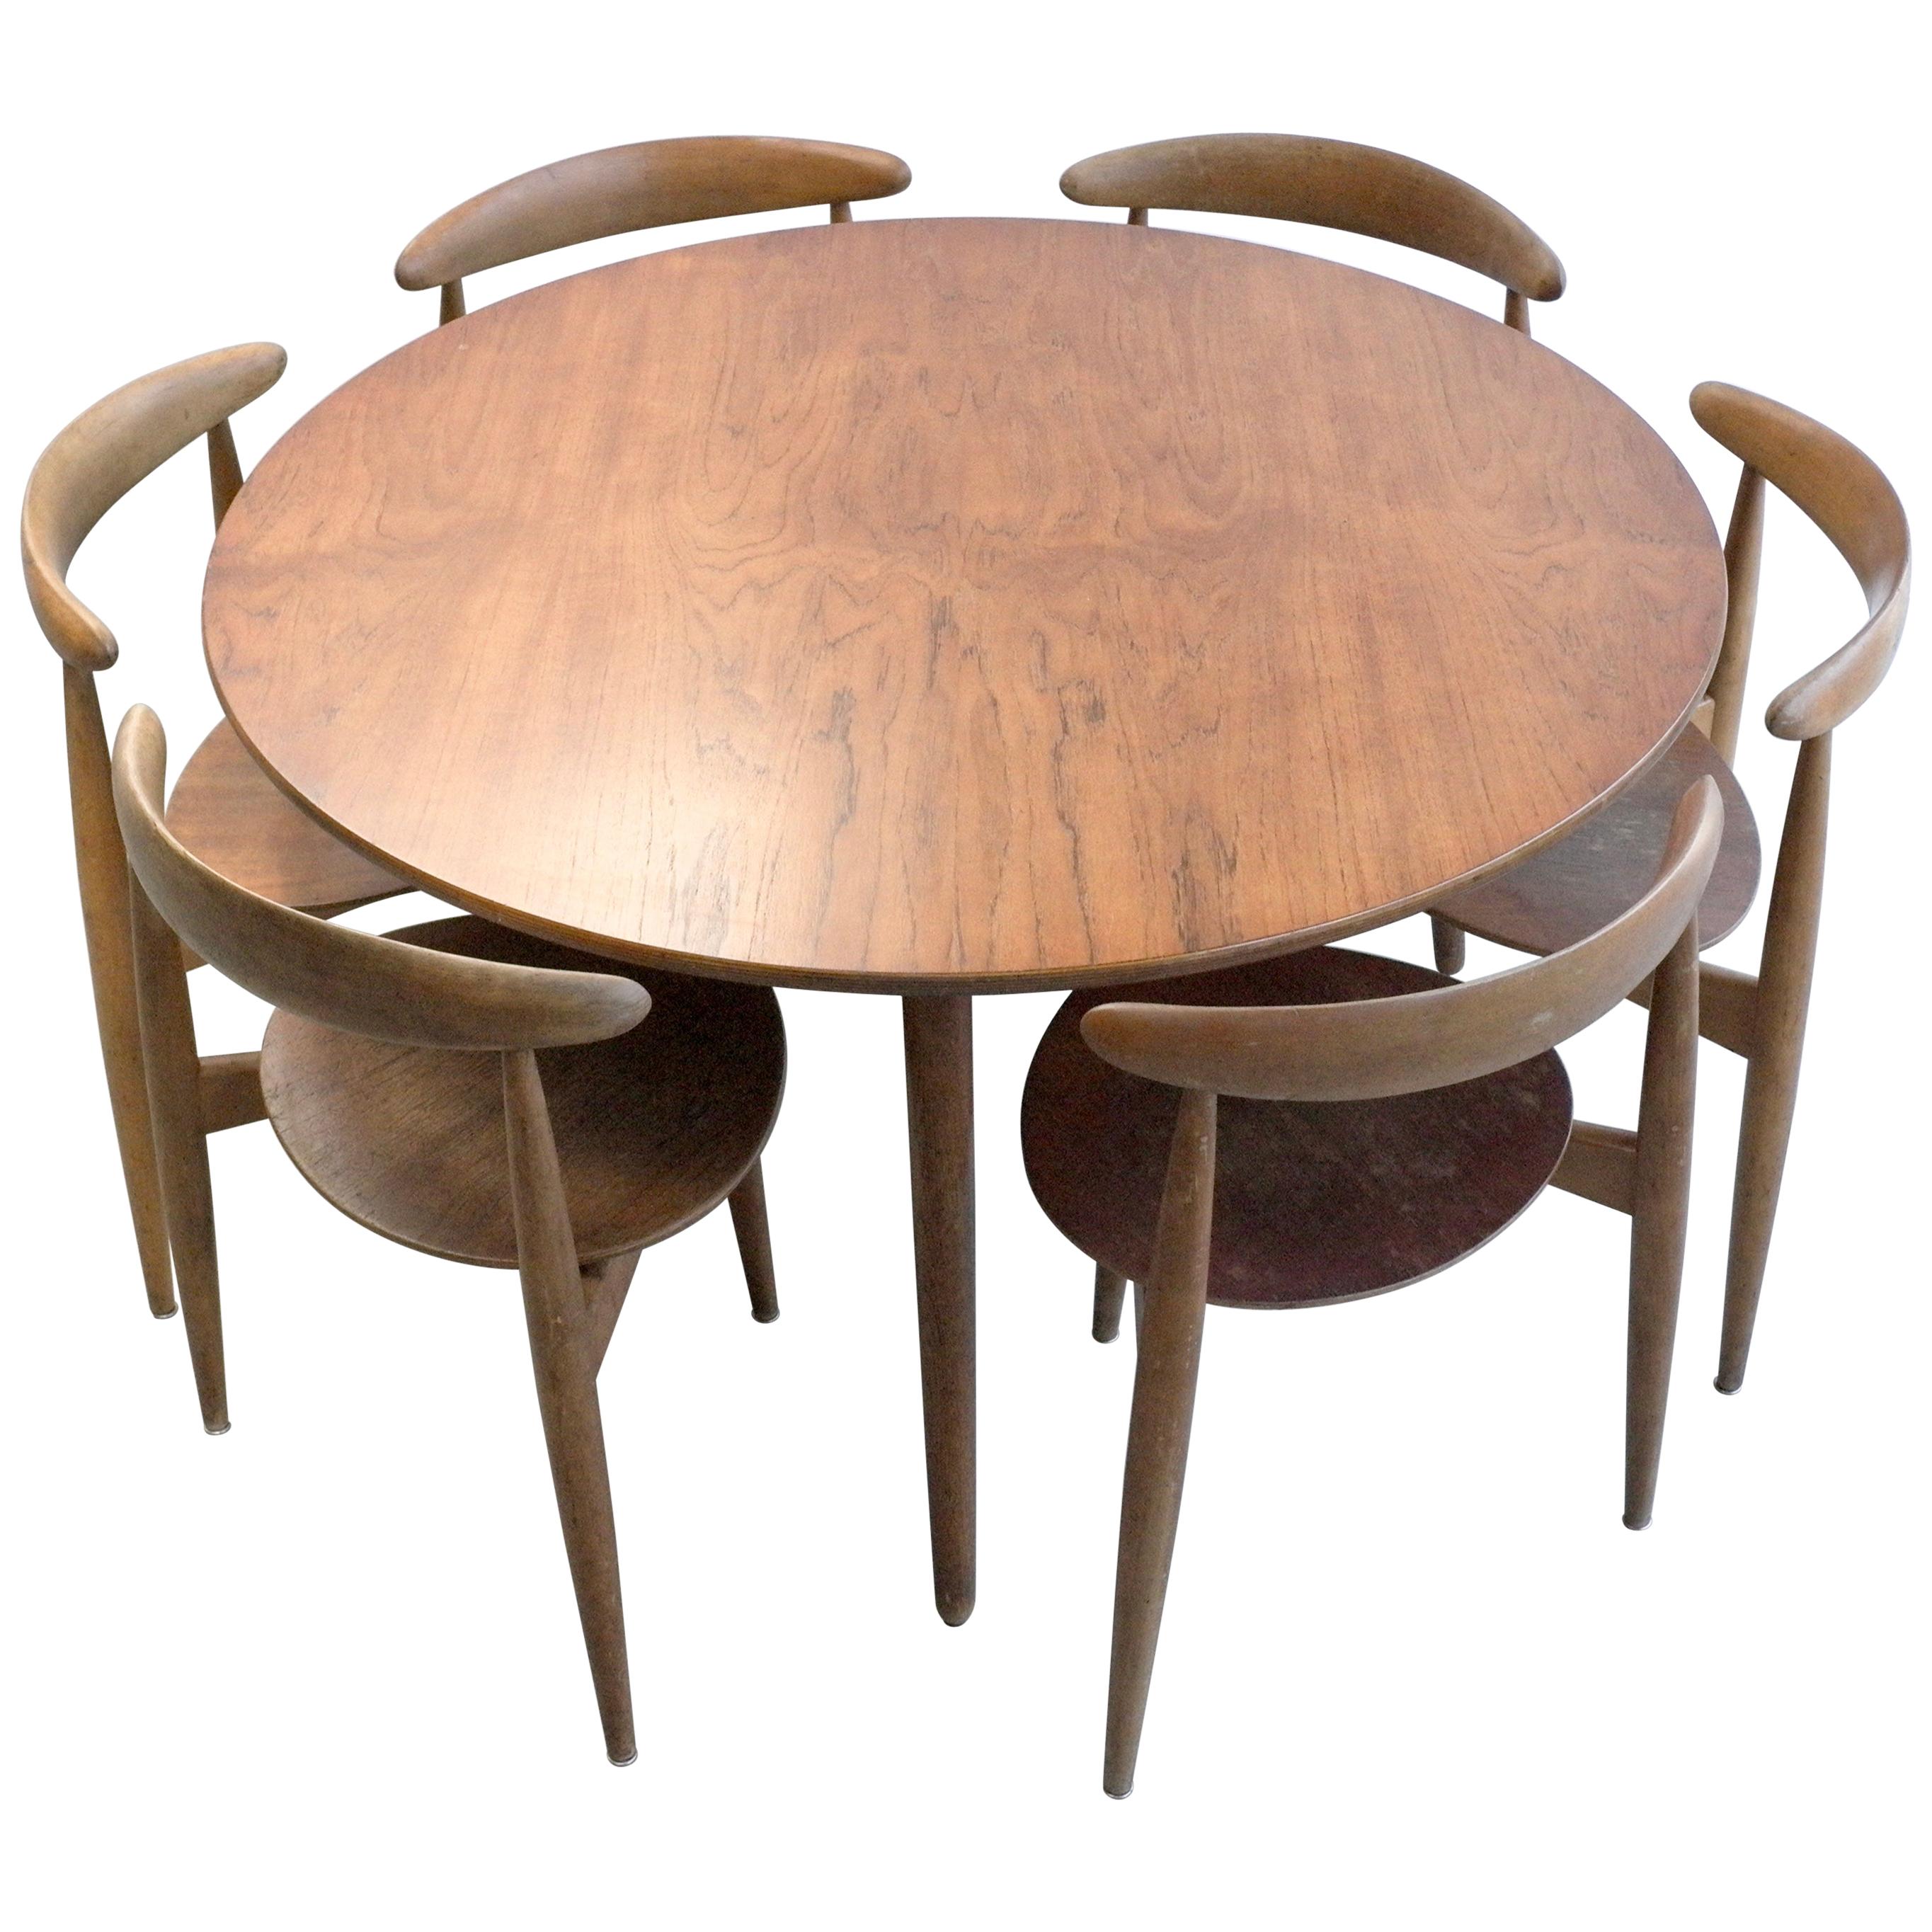 Hans Wegner Teak Dining Table and Six Heart Chairs by Fritz Hansen Denmark 1950s